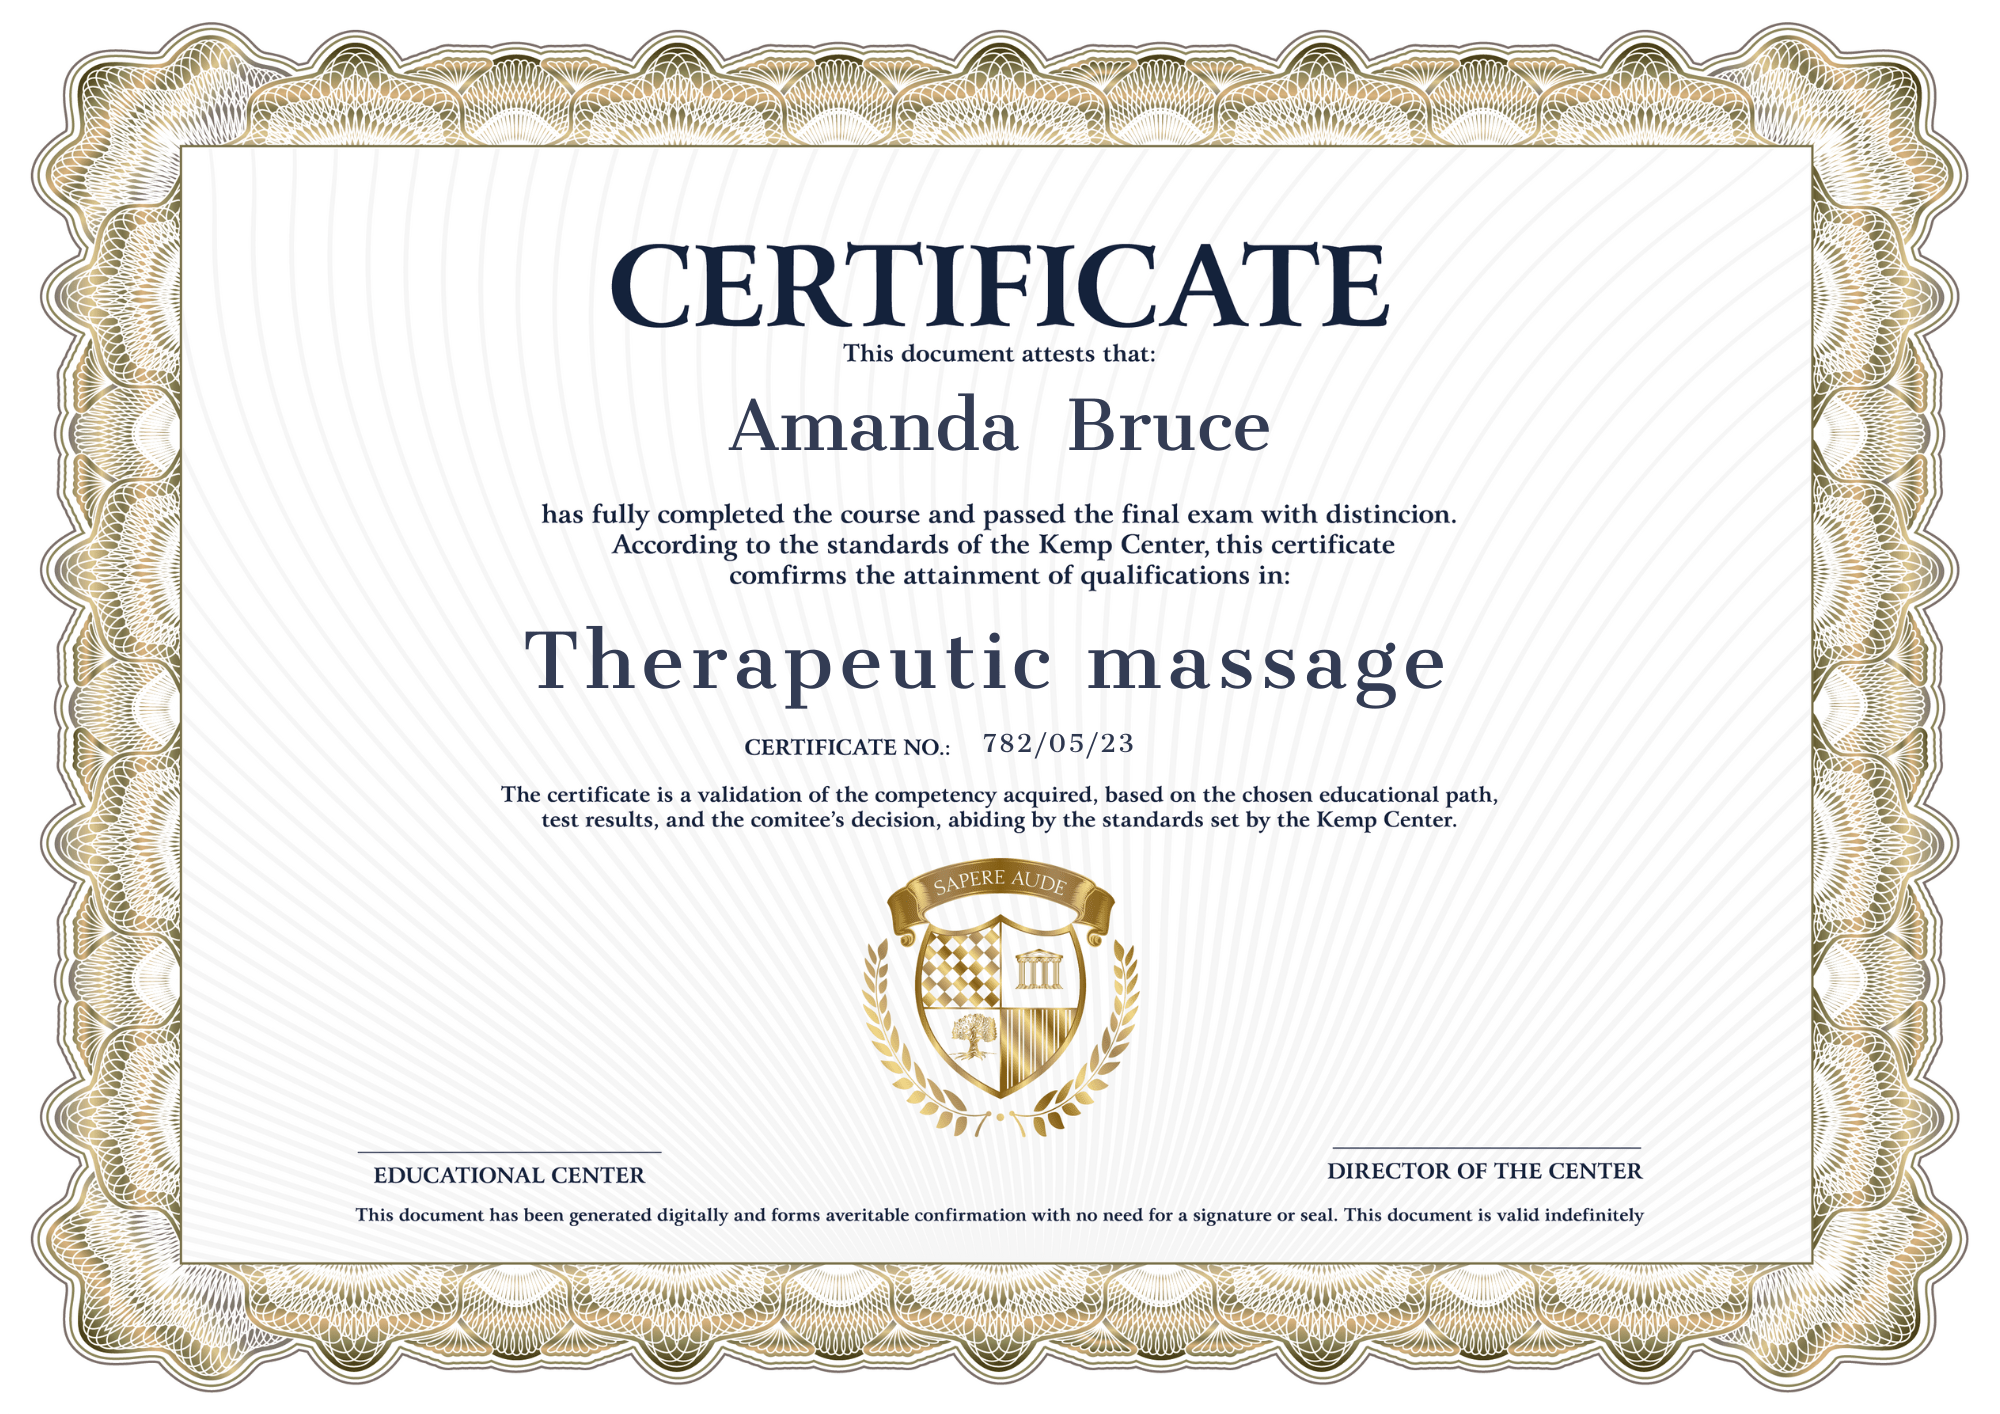 CertificateTherapeutic massage